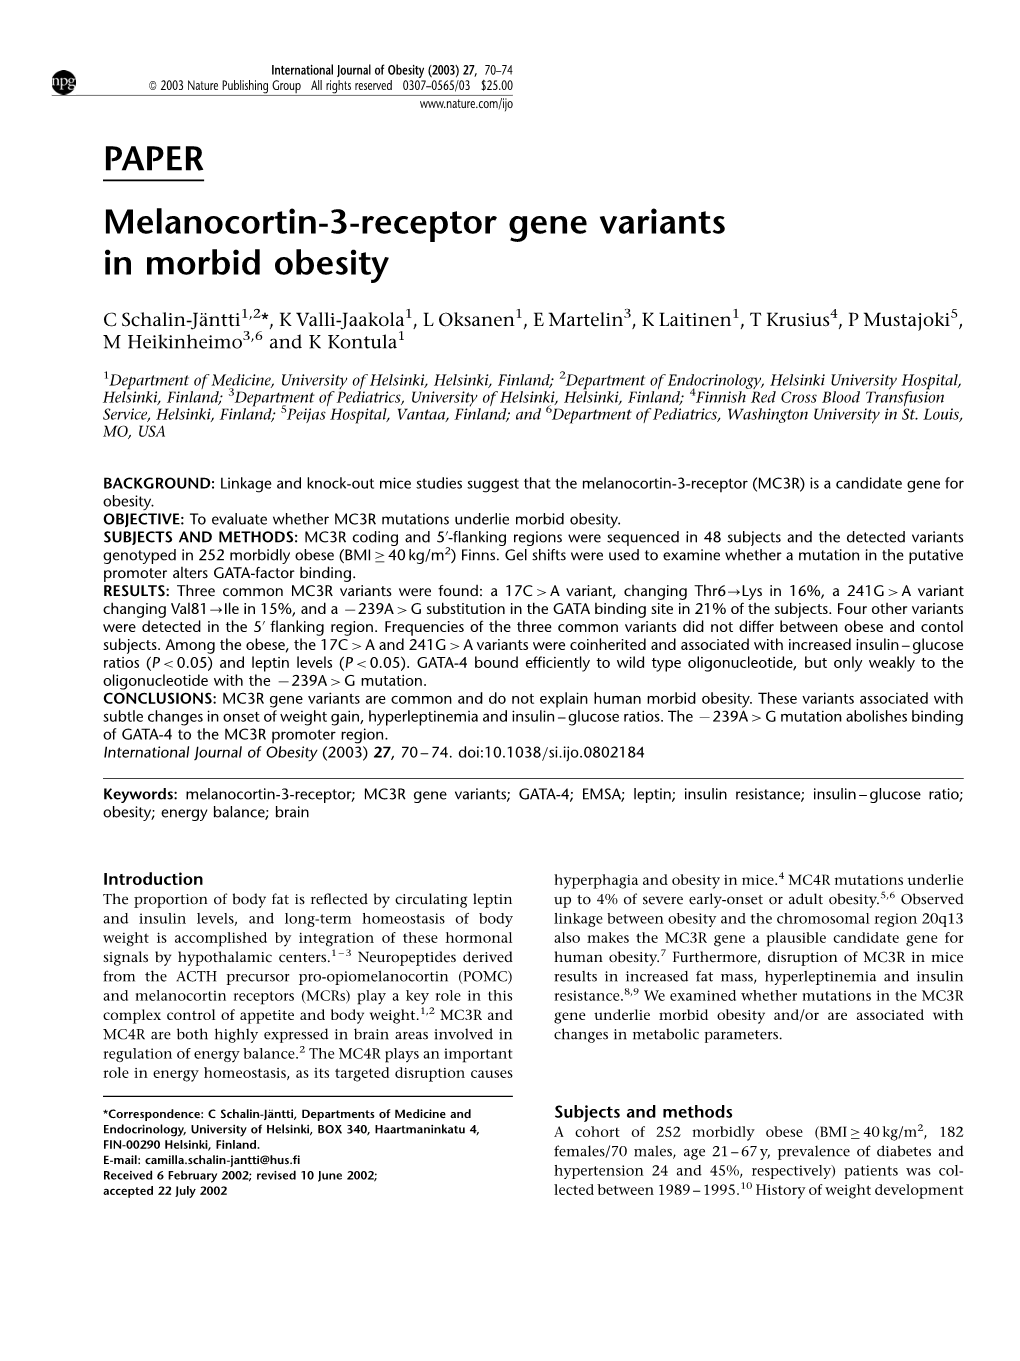 PAPER Melanocortin-3-Receptor Gene Variants in Morbid Obesity